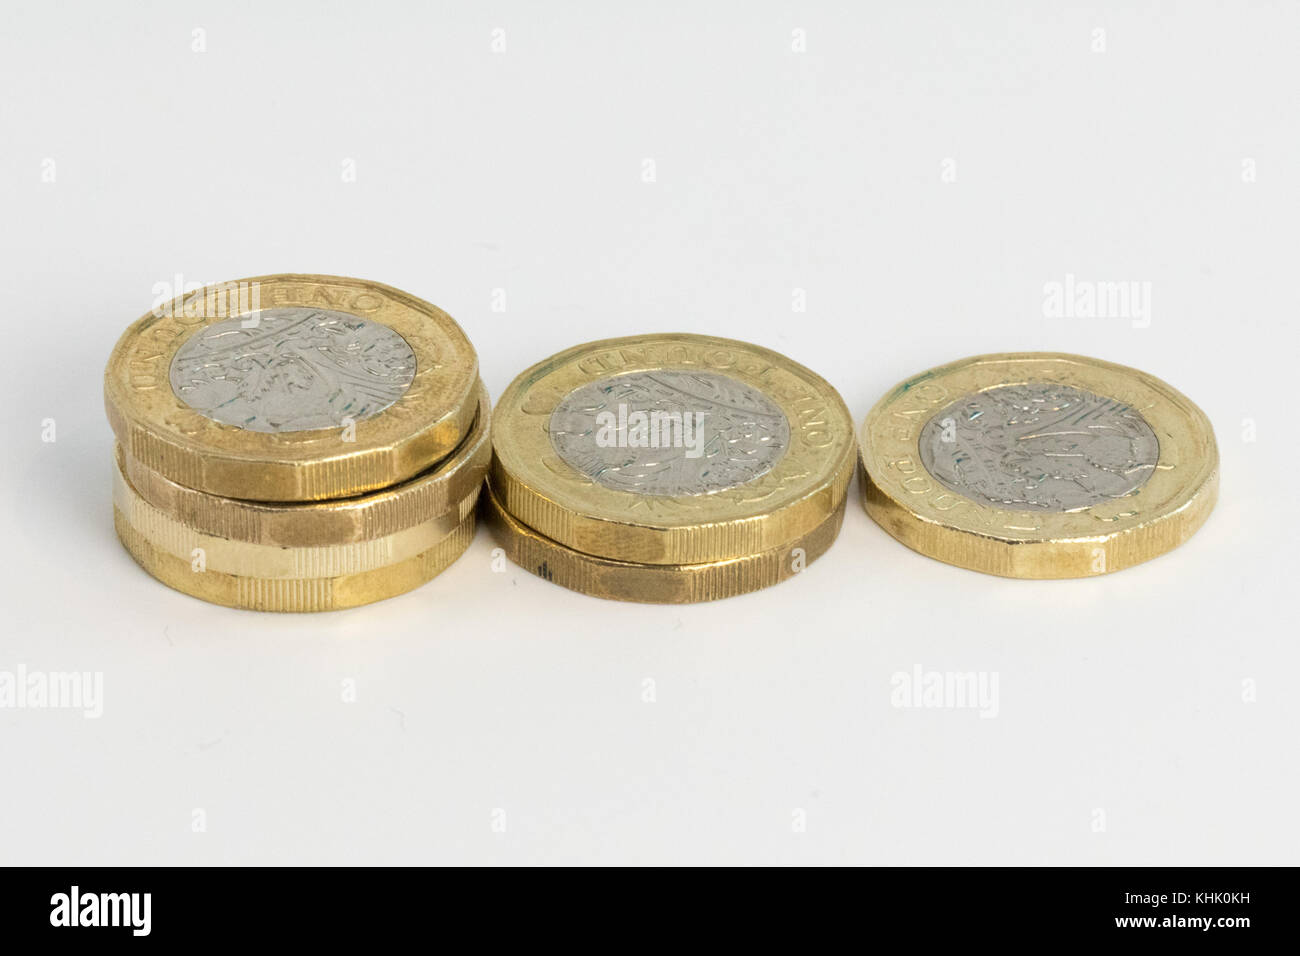 Nuevo uk pound monedas en una pila. Foto de stock